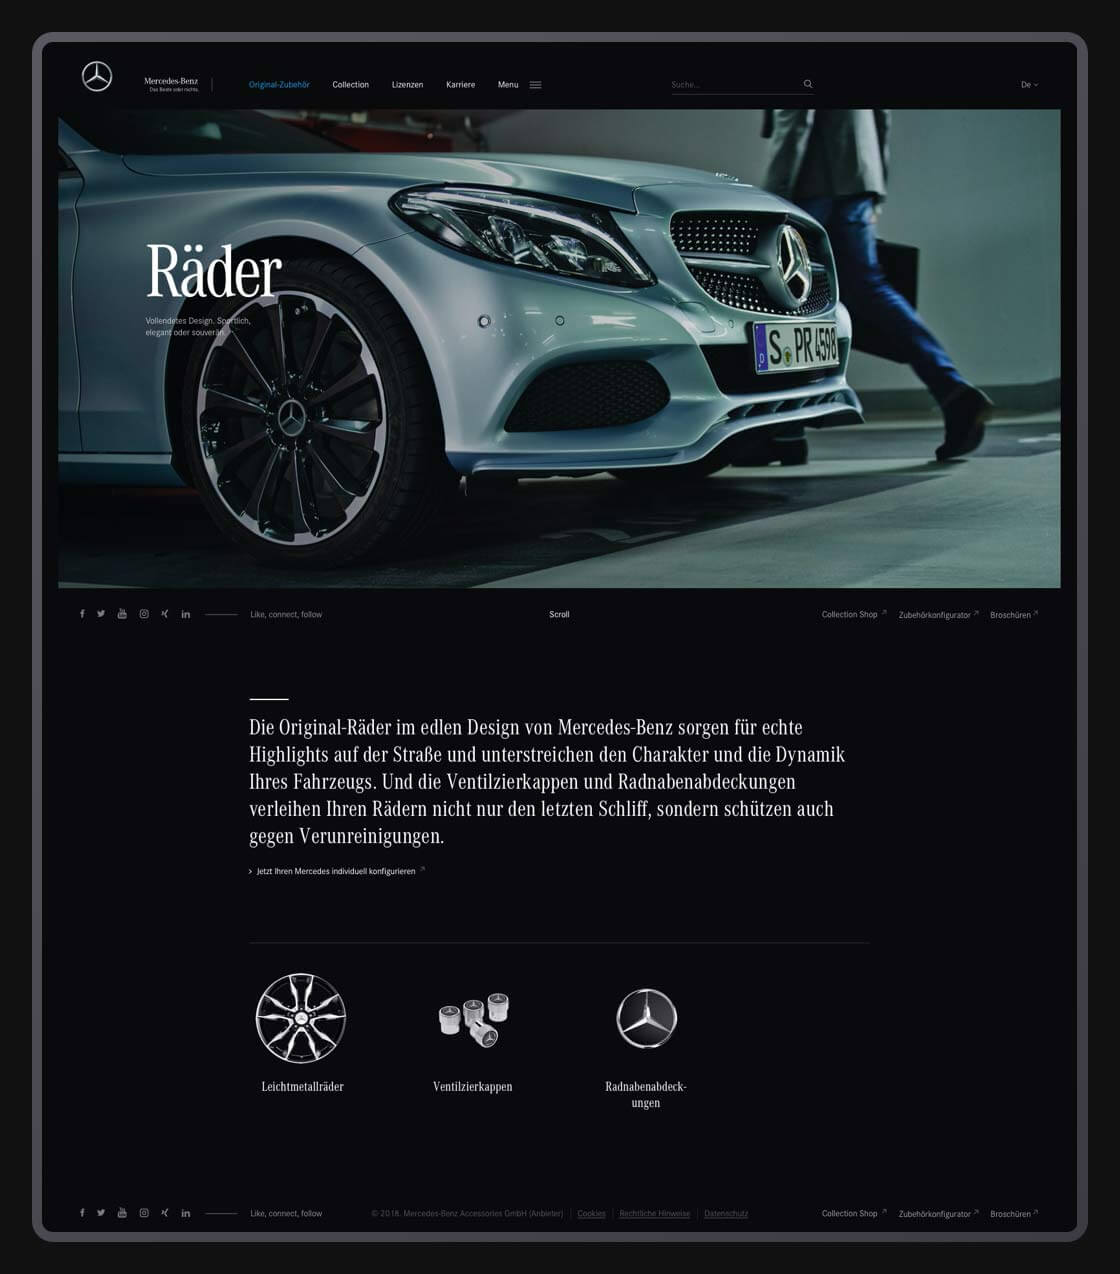  Referenz - Mercedes-Benz Customer Solutions - Web Corporativa